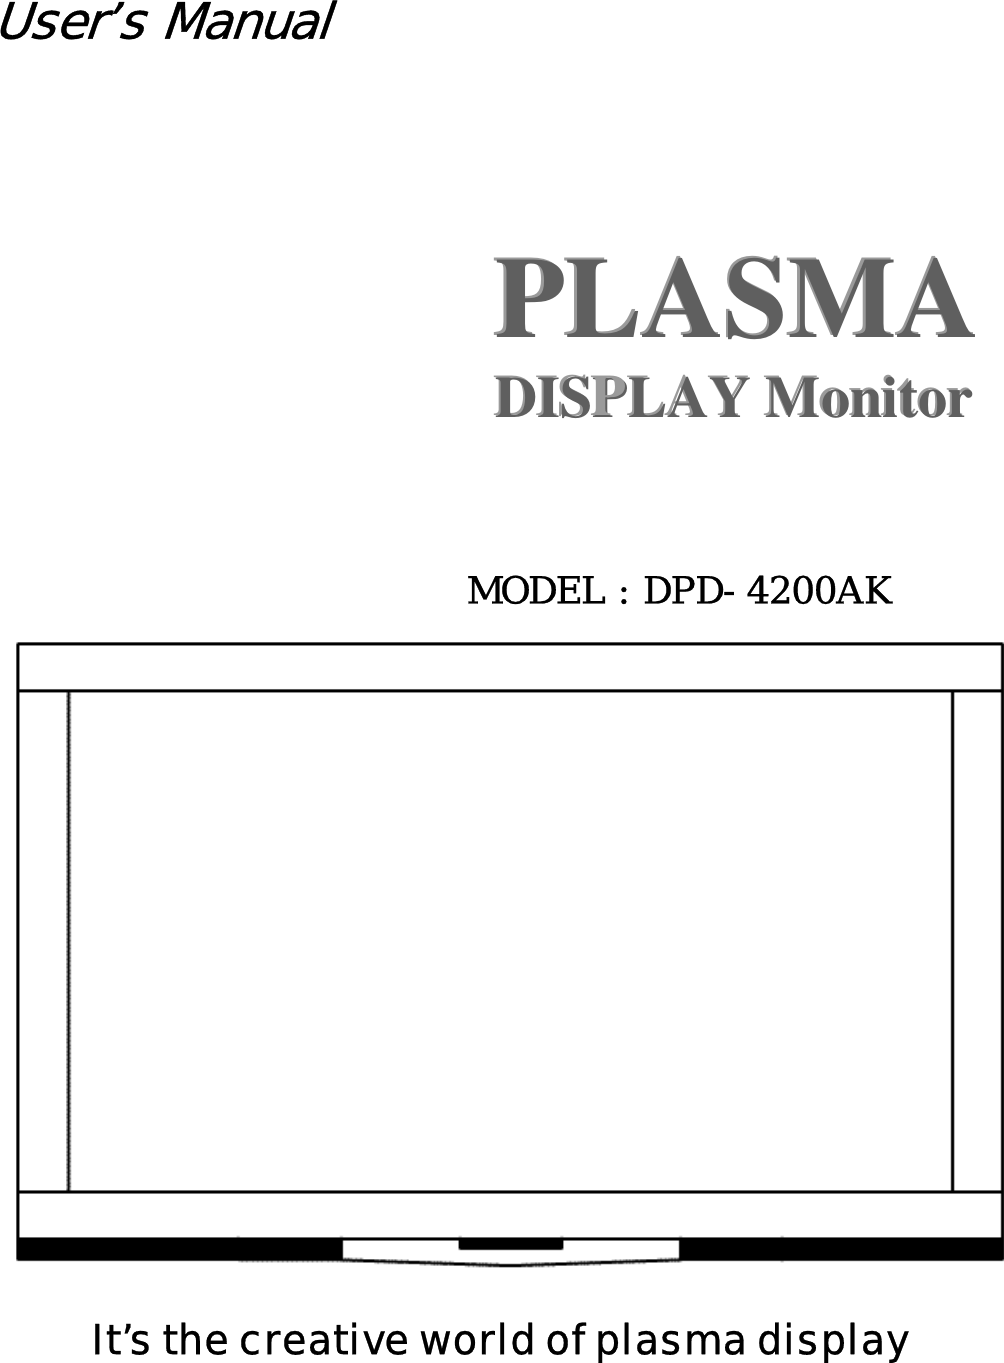 User’s Manual           PLASMA PPLLAASSMMAA         DISPPLAY Monitor               DDIISSPLLAAYY  MMoonniittoorr     MODEL : DPD-4200AK      It’s the creative world of plasma display 